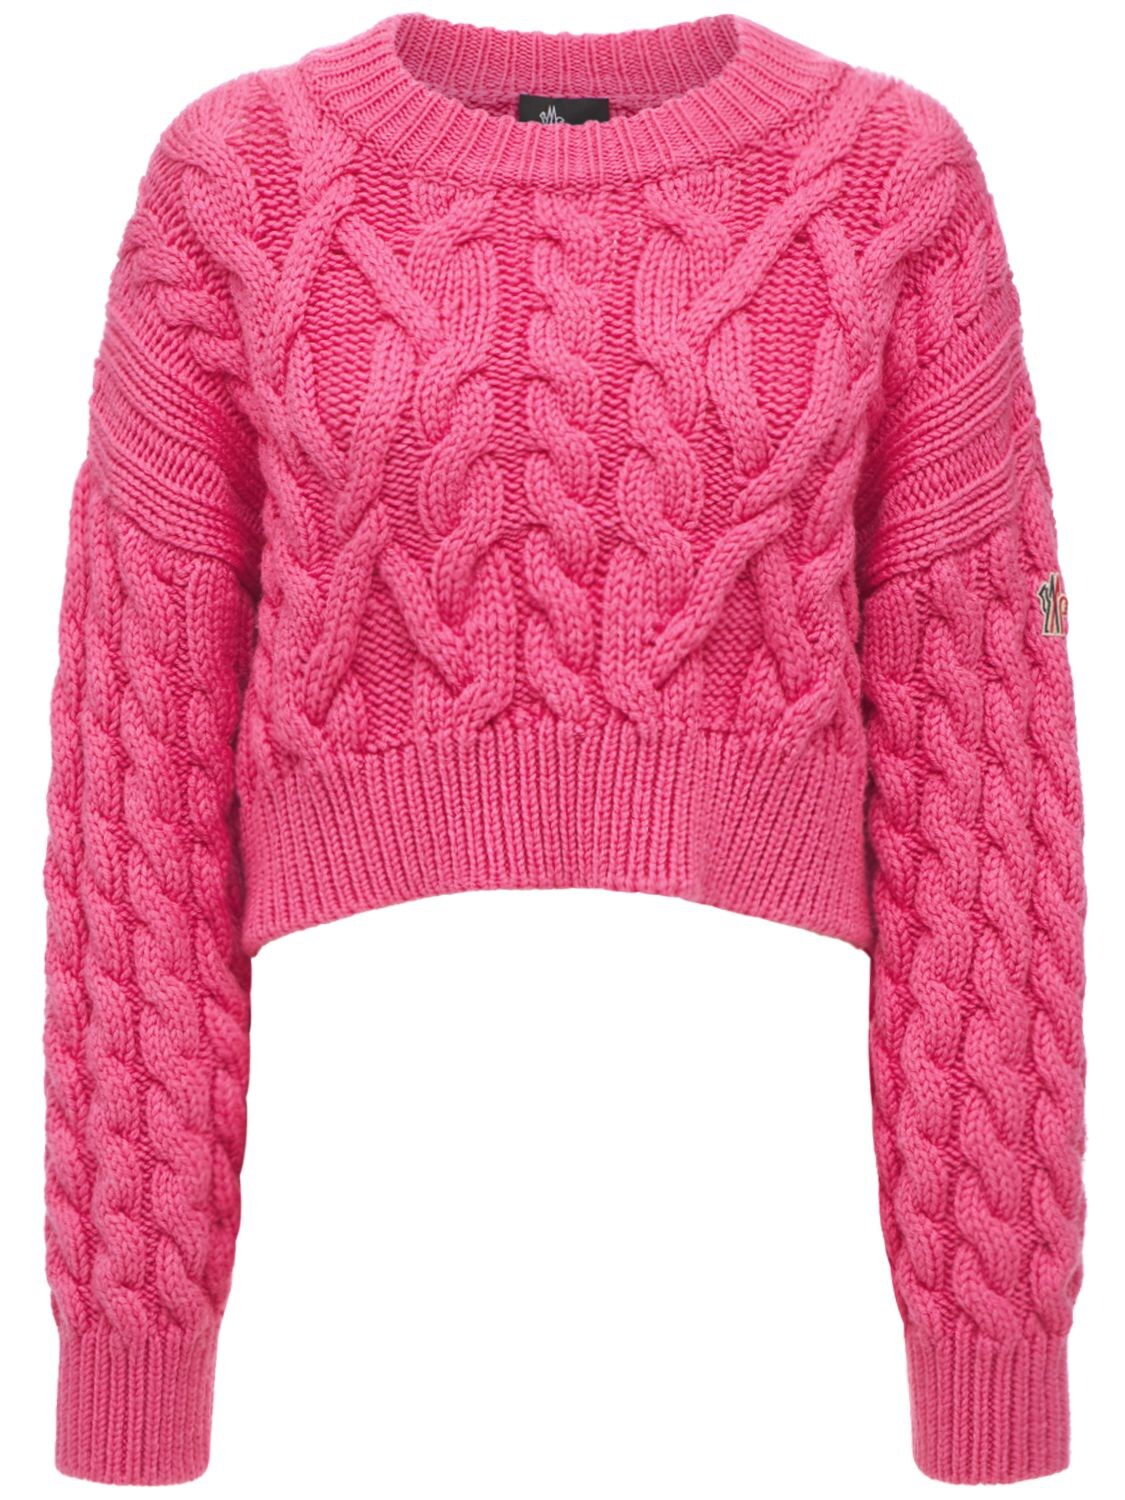 Braided Wool Knit Sweater